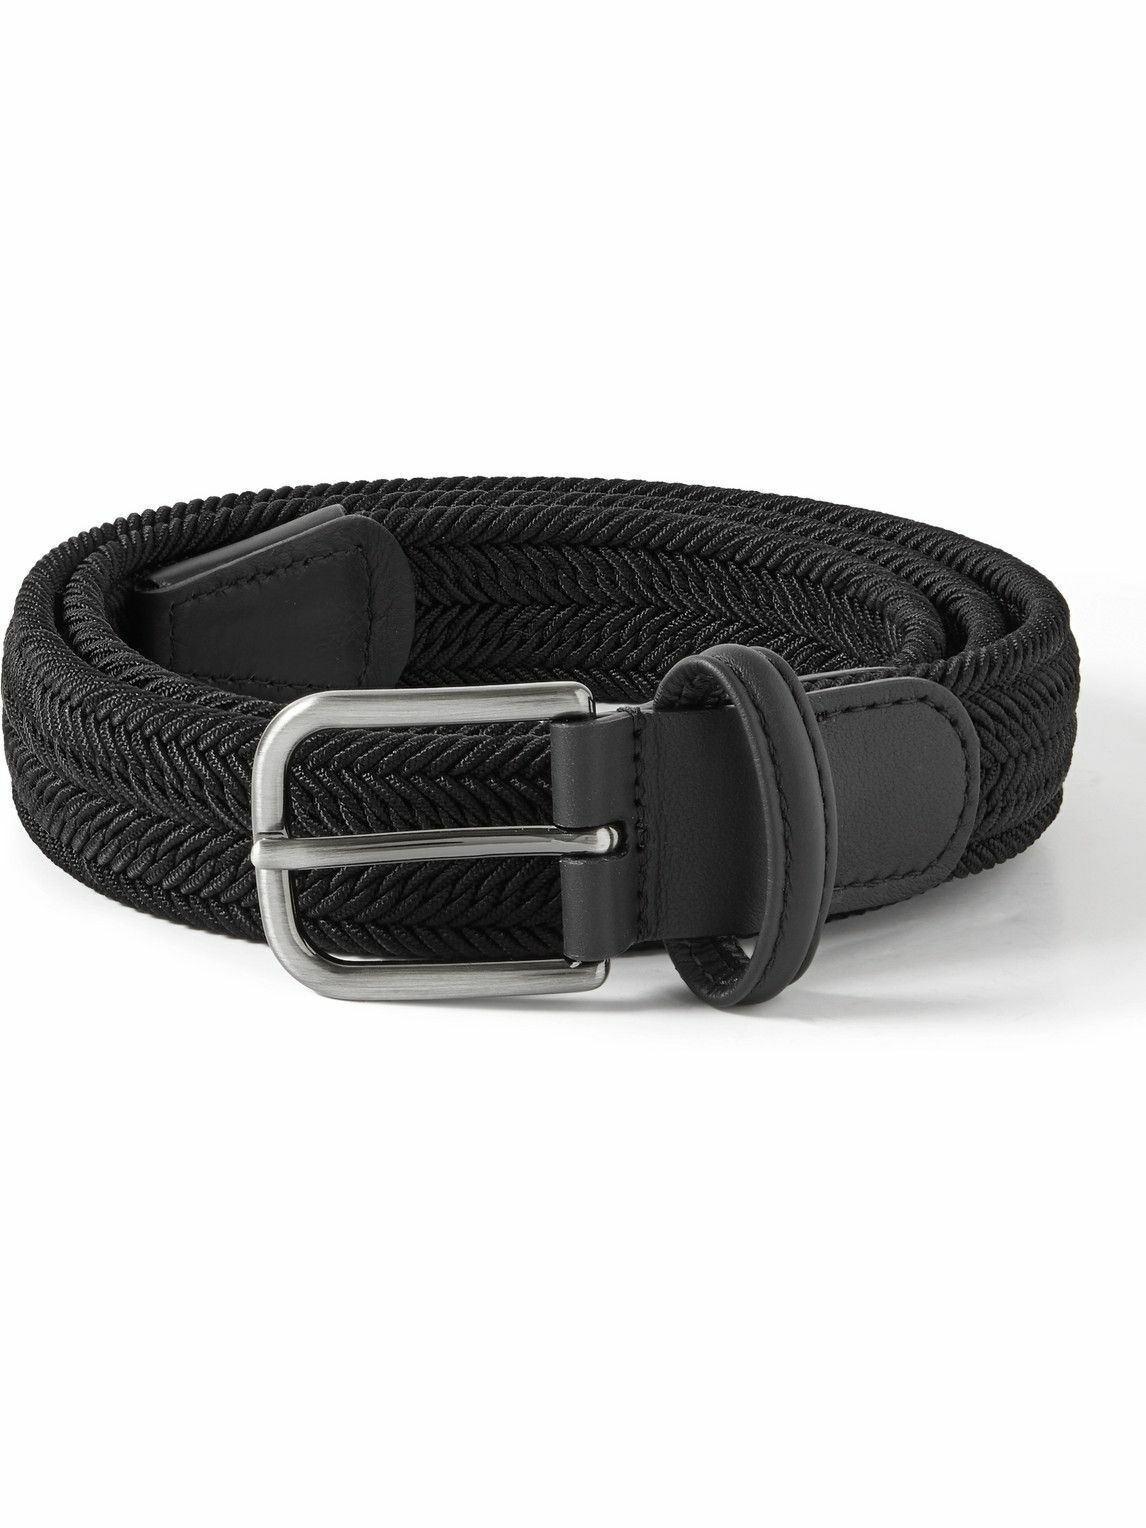 Anderson's Tonal Stretch Woven Belt, Belts